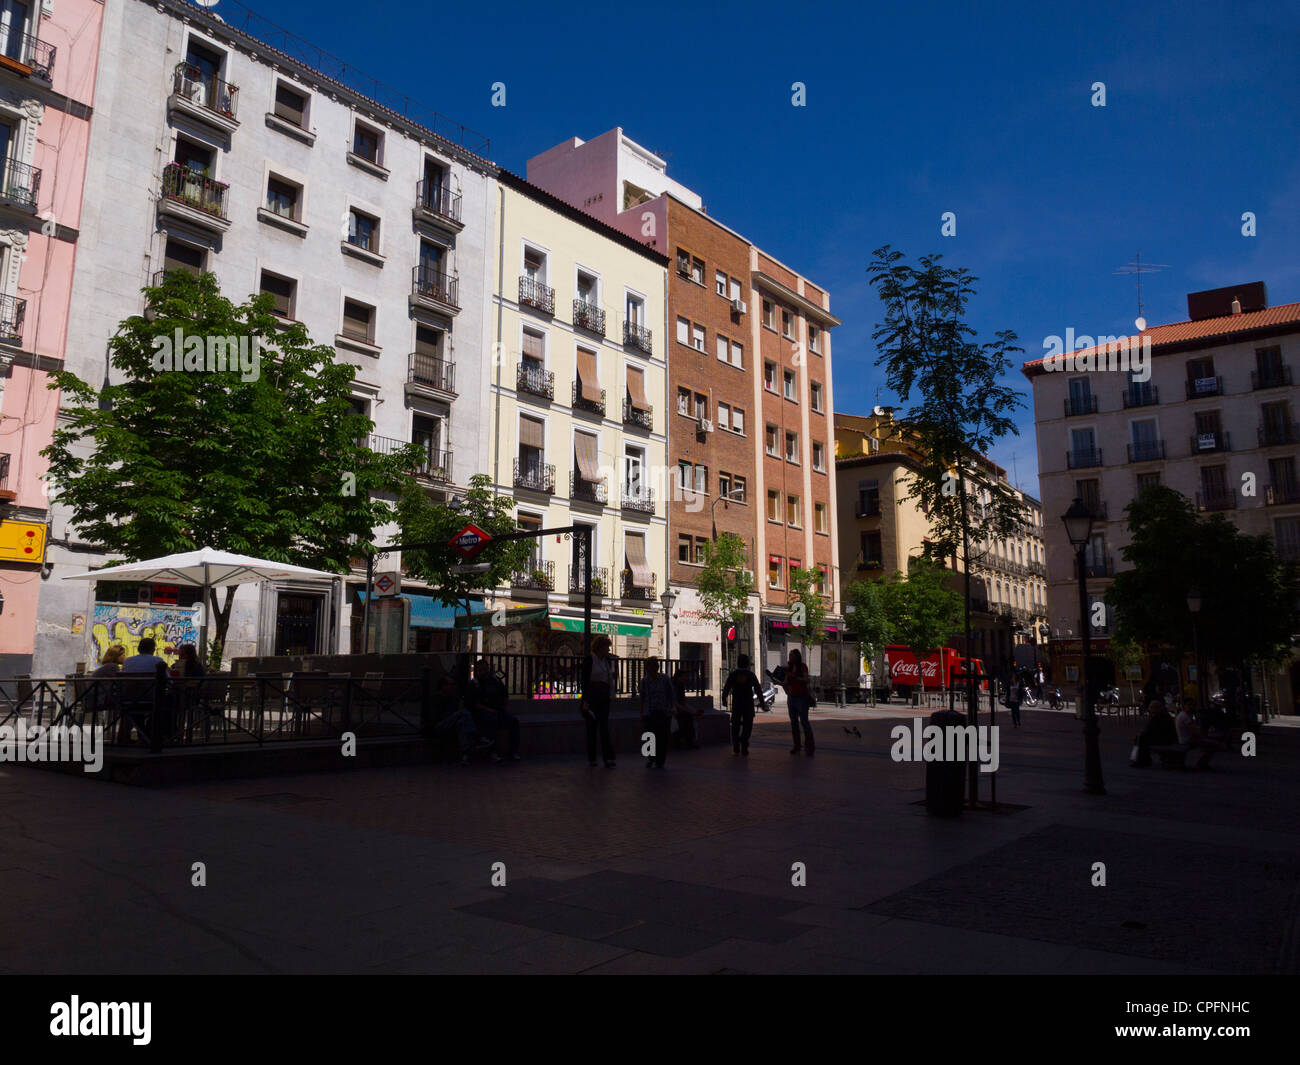 Chueca neighborhood in Madrid, Spain Stock Photo